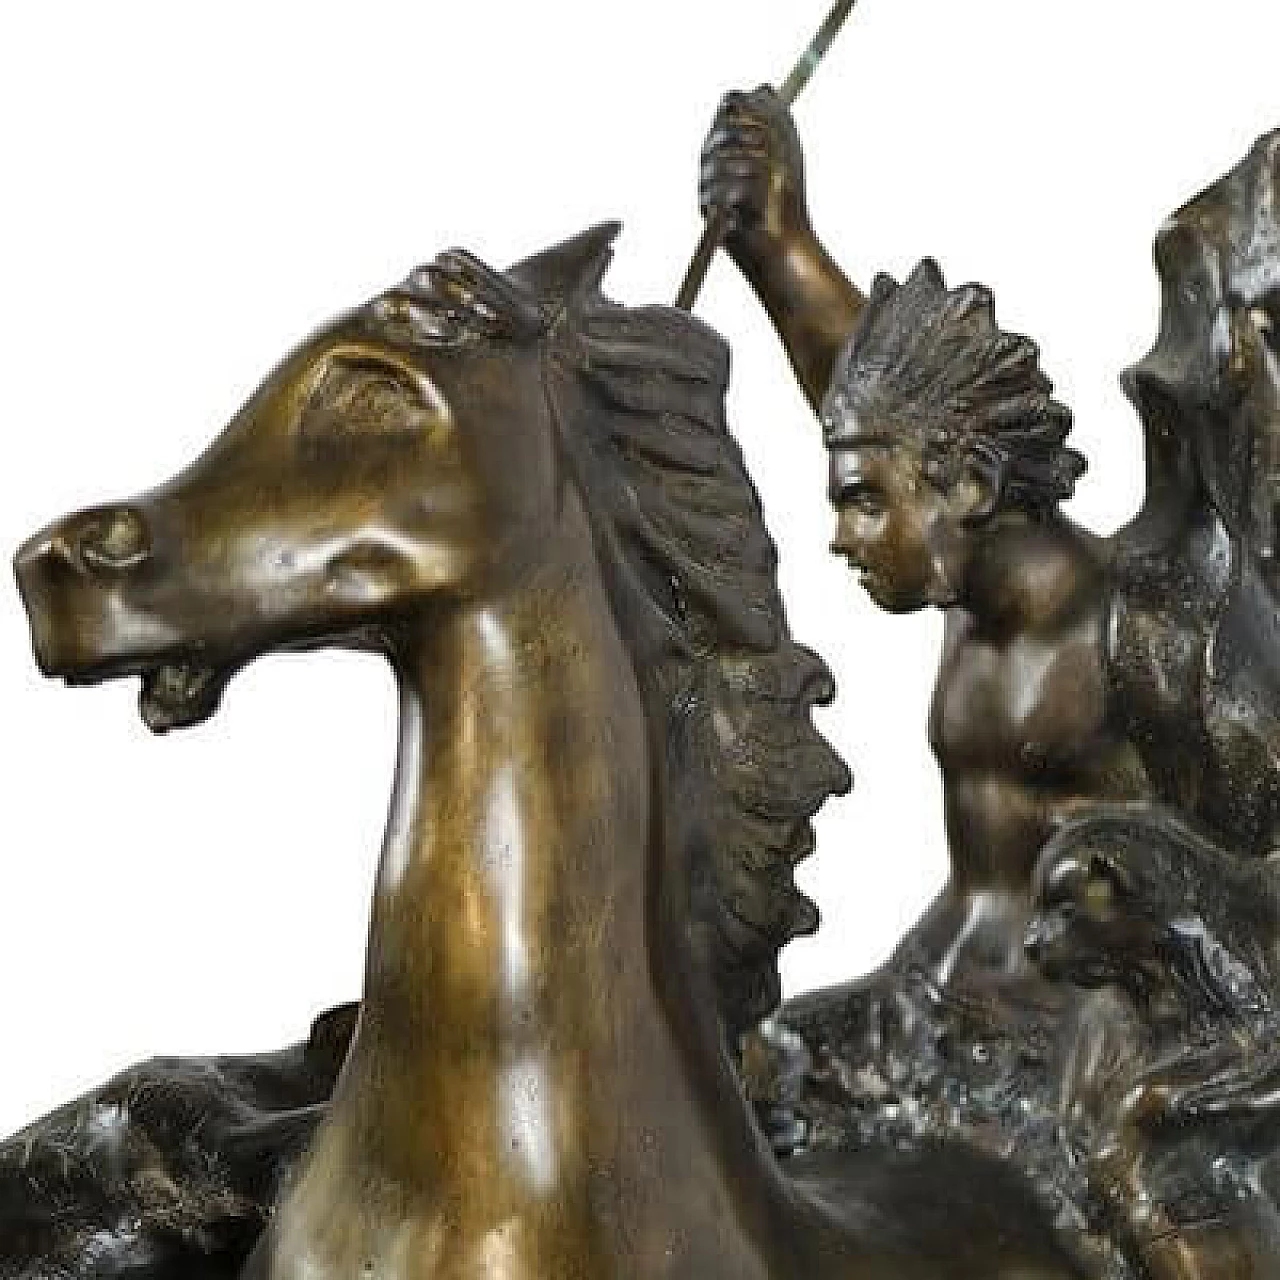 Indian warrior on horseback, reproduction after Tommaso Campajola, bronze sculpture 12